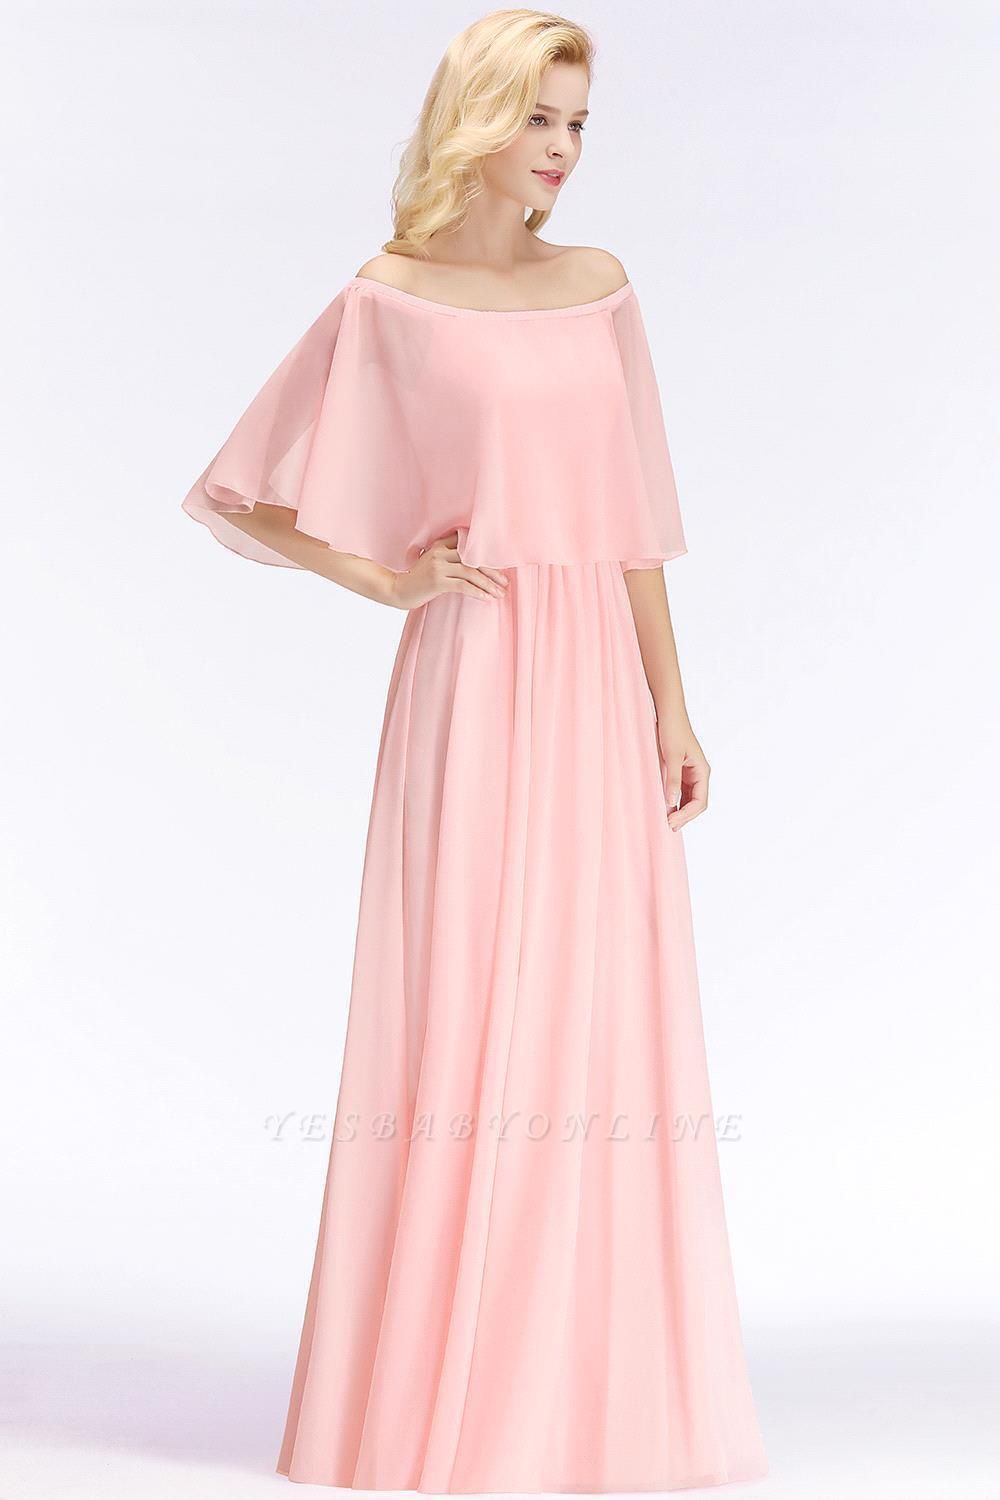 Chiffon Pink Off-the-Shoulder Bridesmaid Dresses